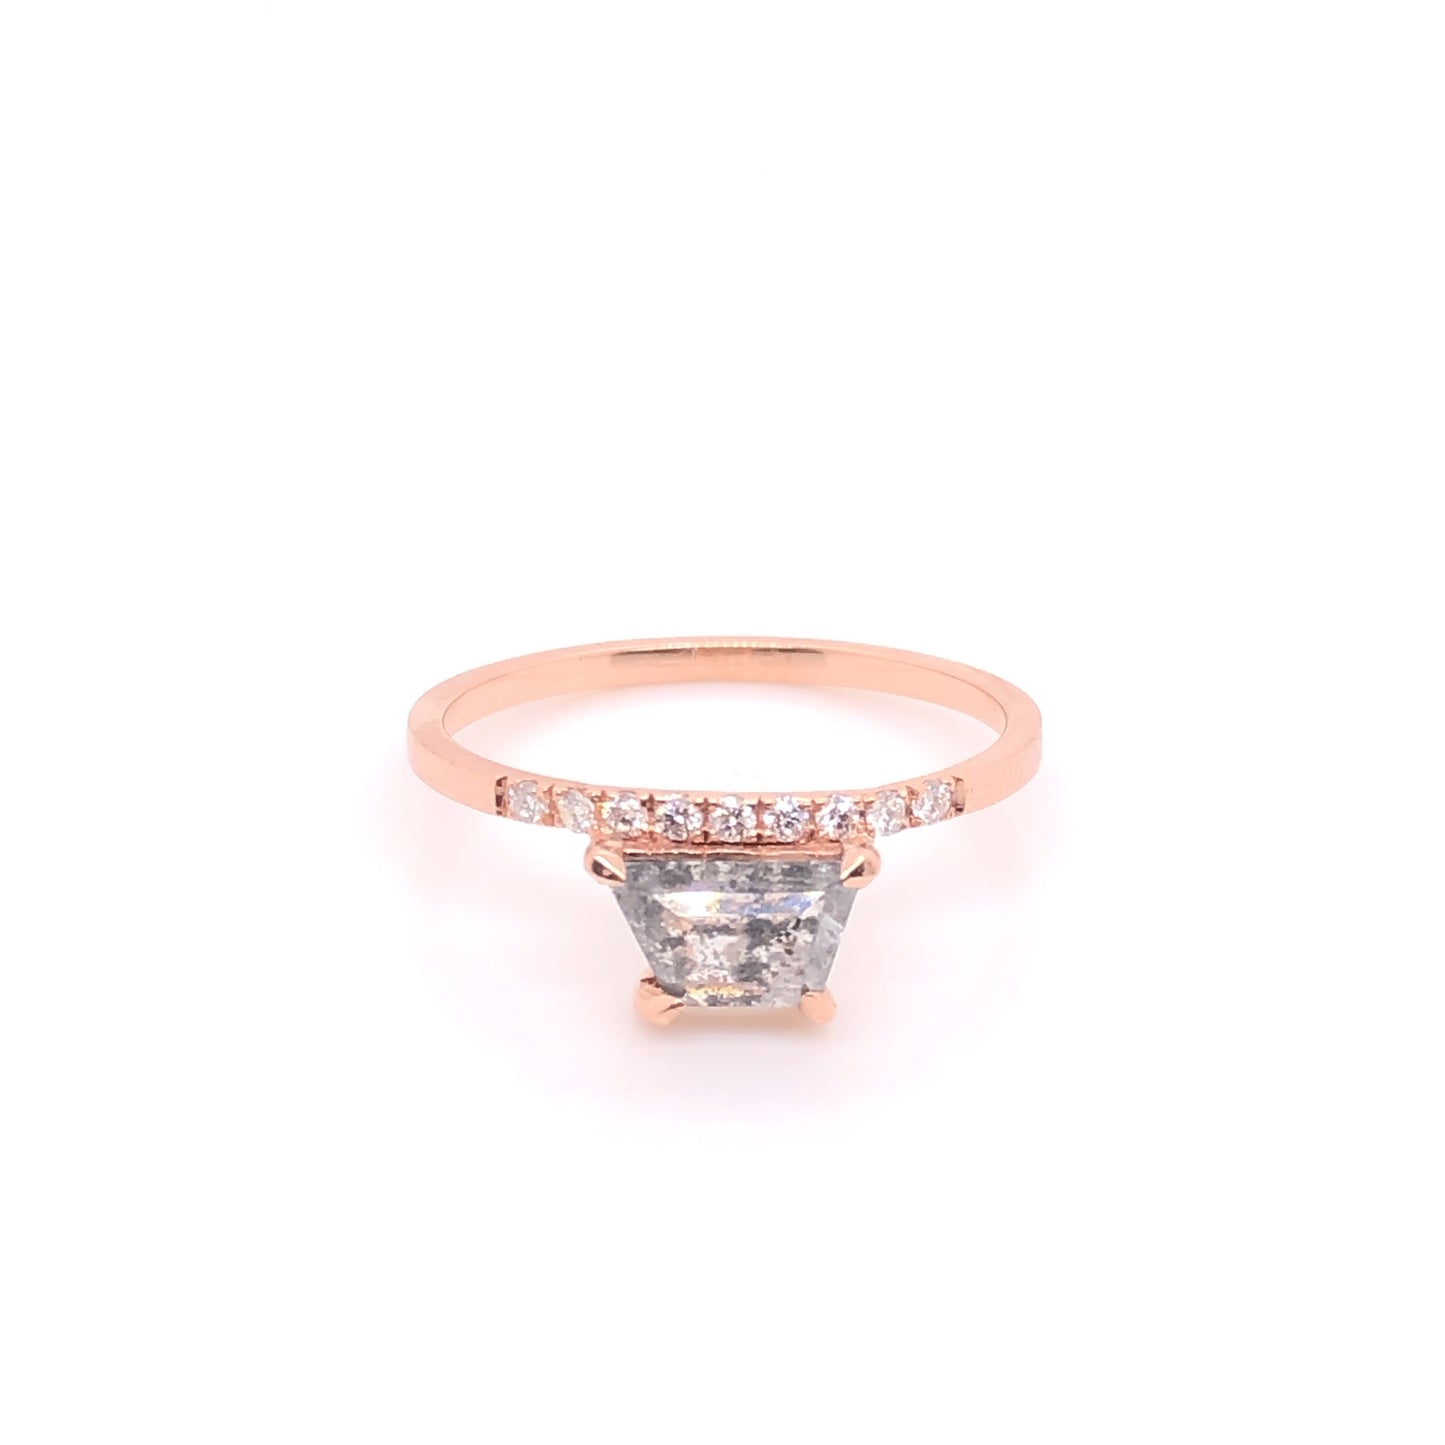 IMMEDIATE DELIVERY / Salt &amp; Pepper Diamond Ring Hexagonal cut with diamonds / 14k Rose Gold / Size 7.25